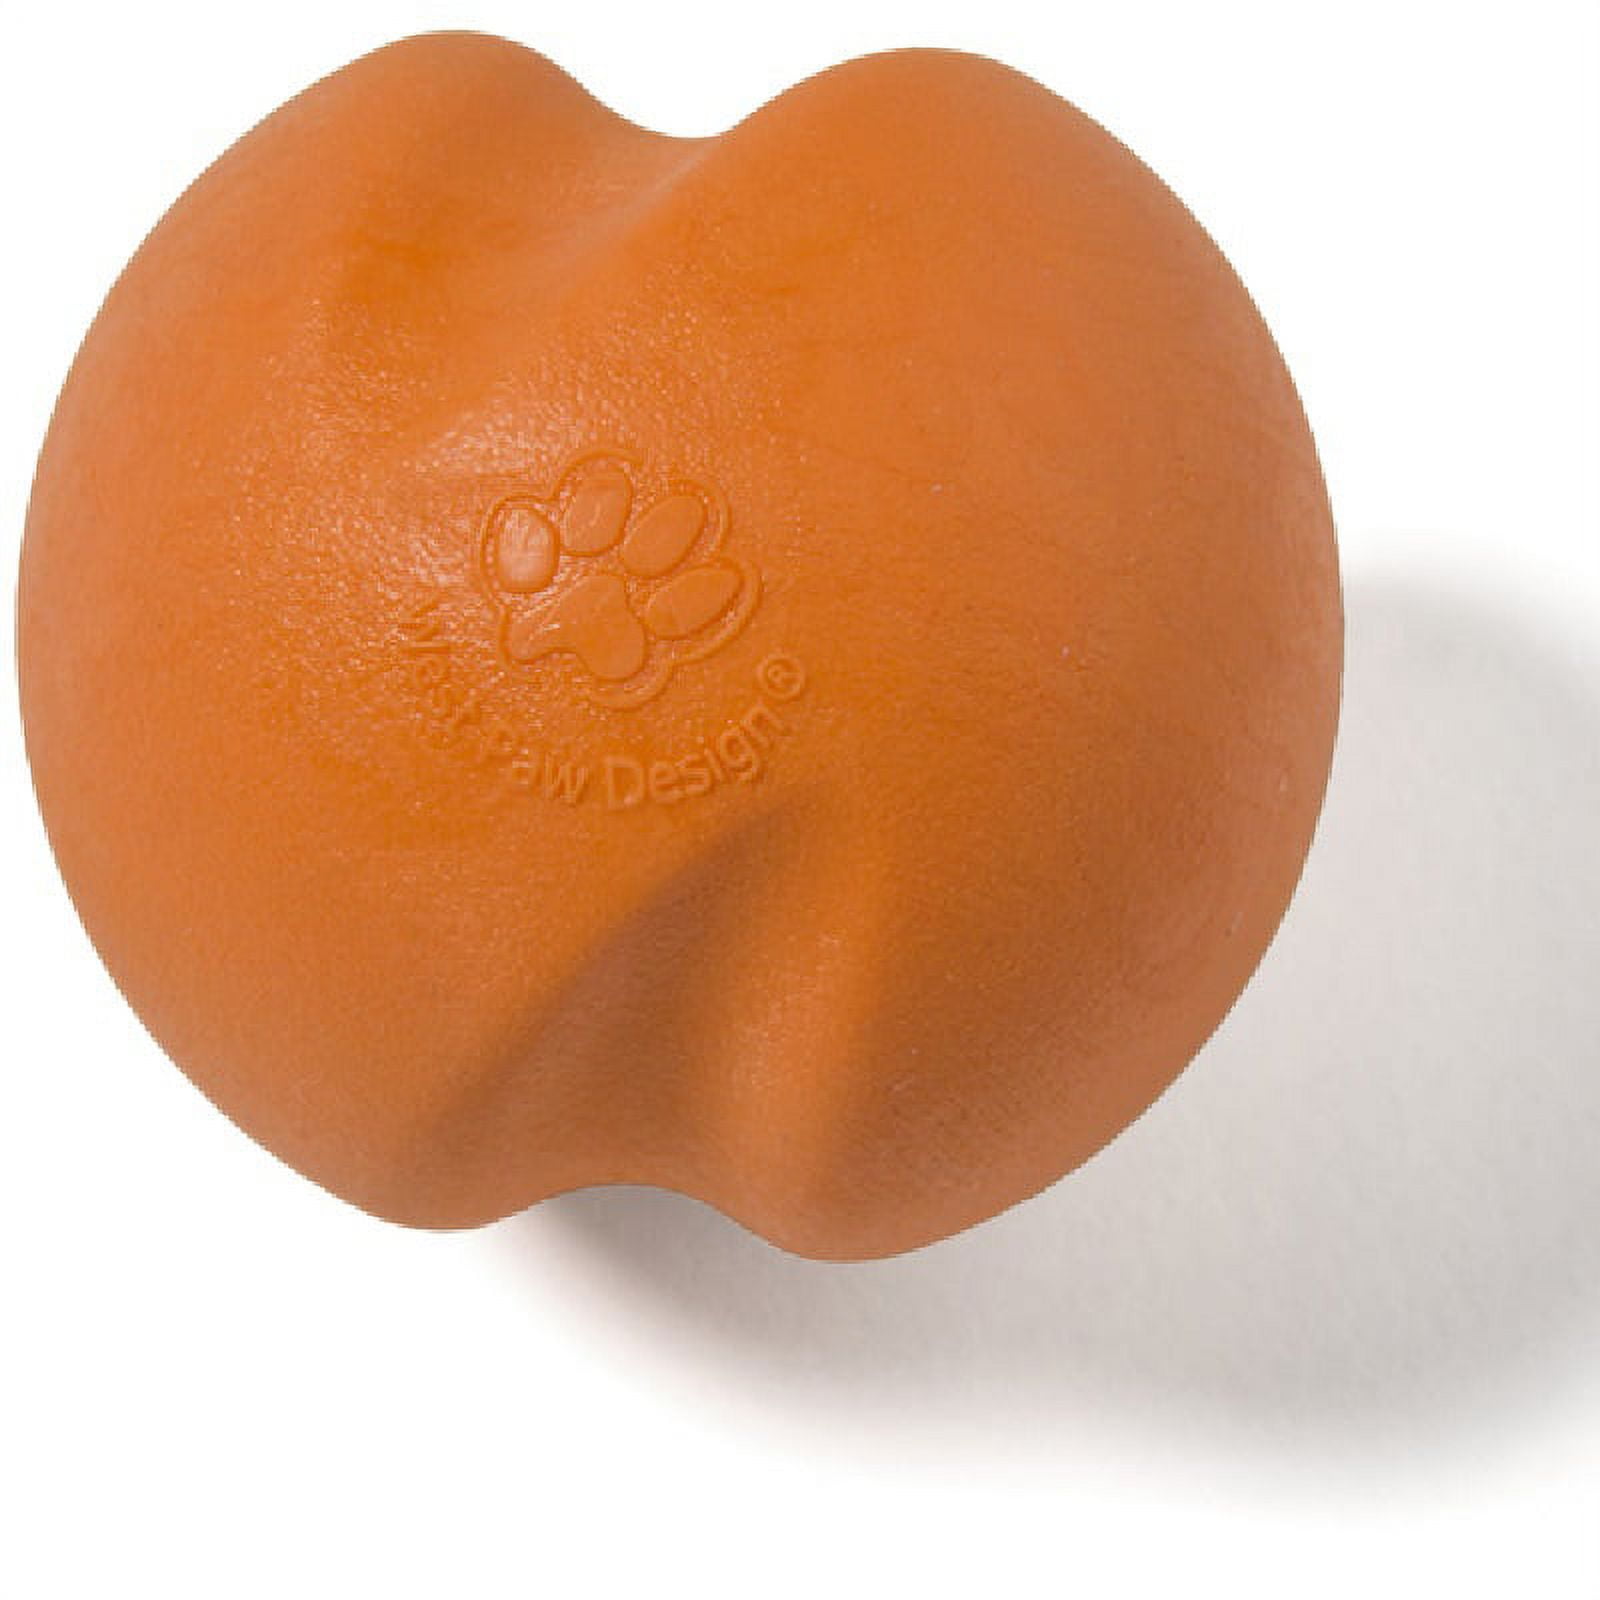 West Paw 8000381 Zogoflex Orange Jive Synthetic Rubber Ball Dog Toy, Small